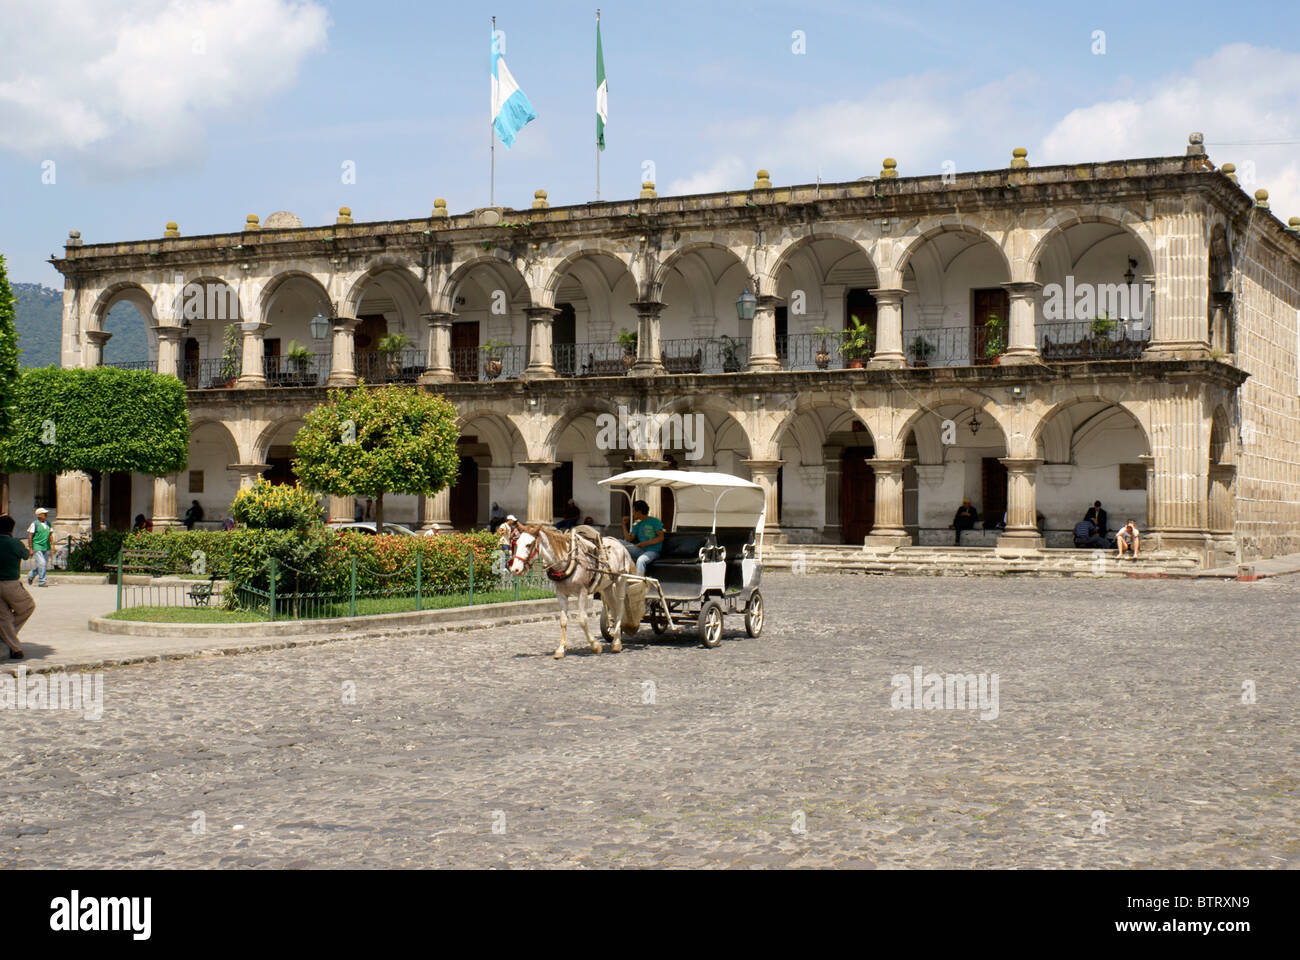 Horse and carriage in front of Palacio de Ayuntamiento or Town Hall facing the Parque Central, Antigua, Guatemala. Stock Photo